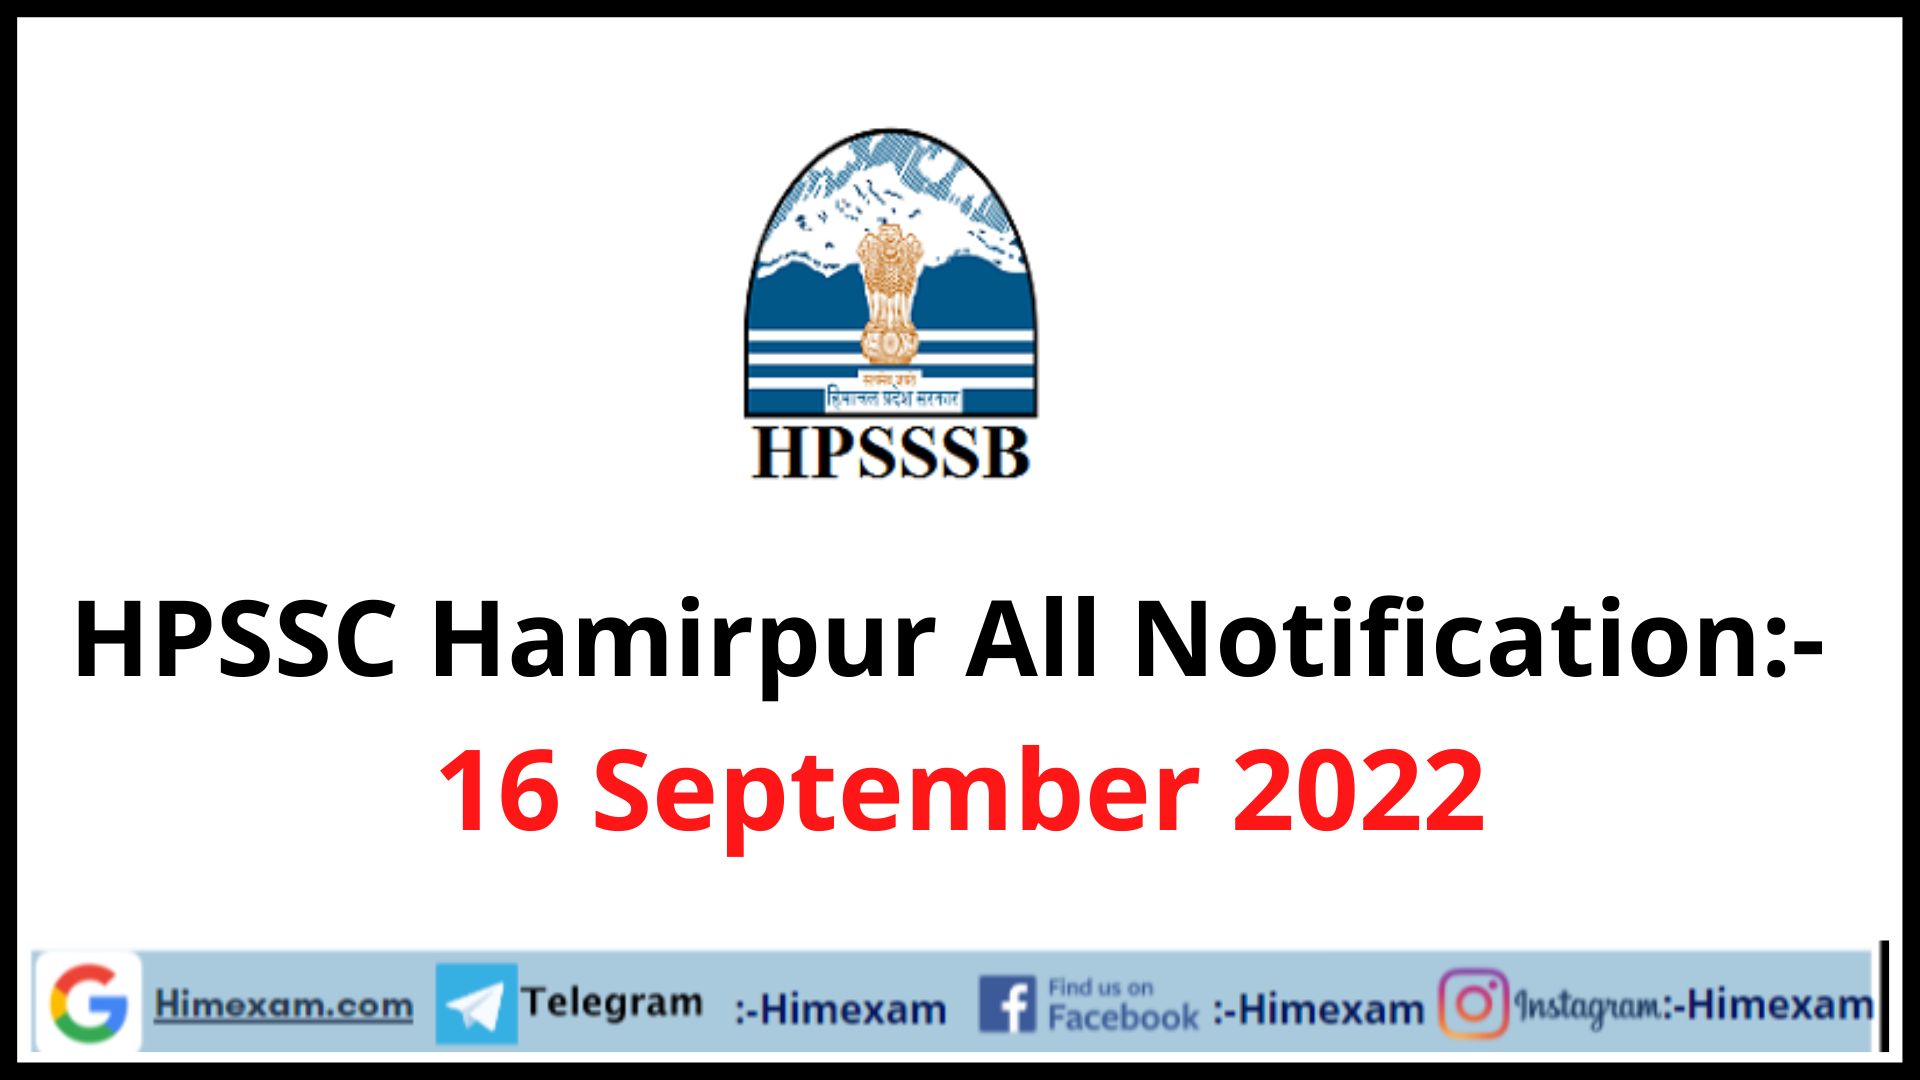 || HPSSC Hamirpur ALL Notifications:- 16 September 2022|| HPSSSB Hamirpur ALL Notifications:- 16 September 2022||